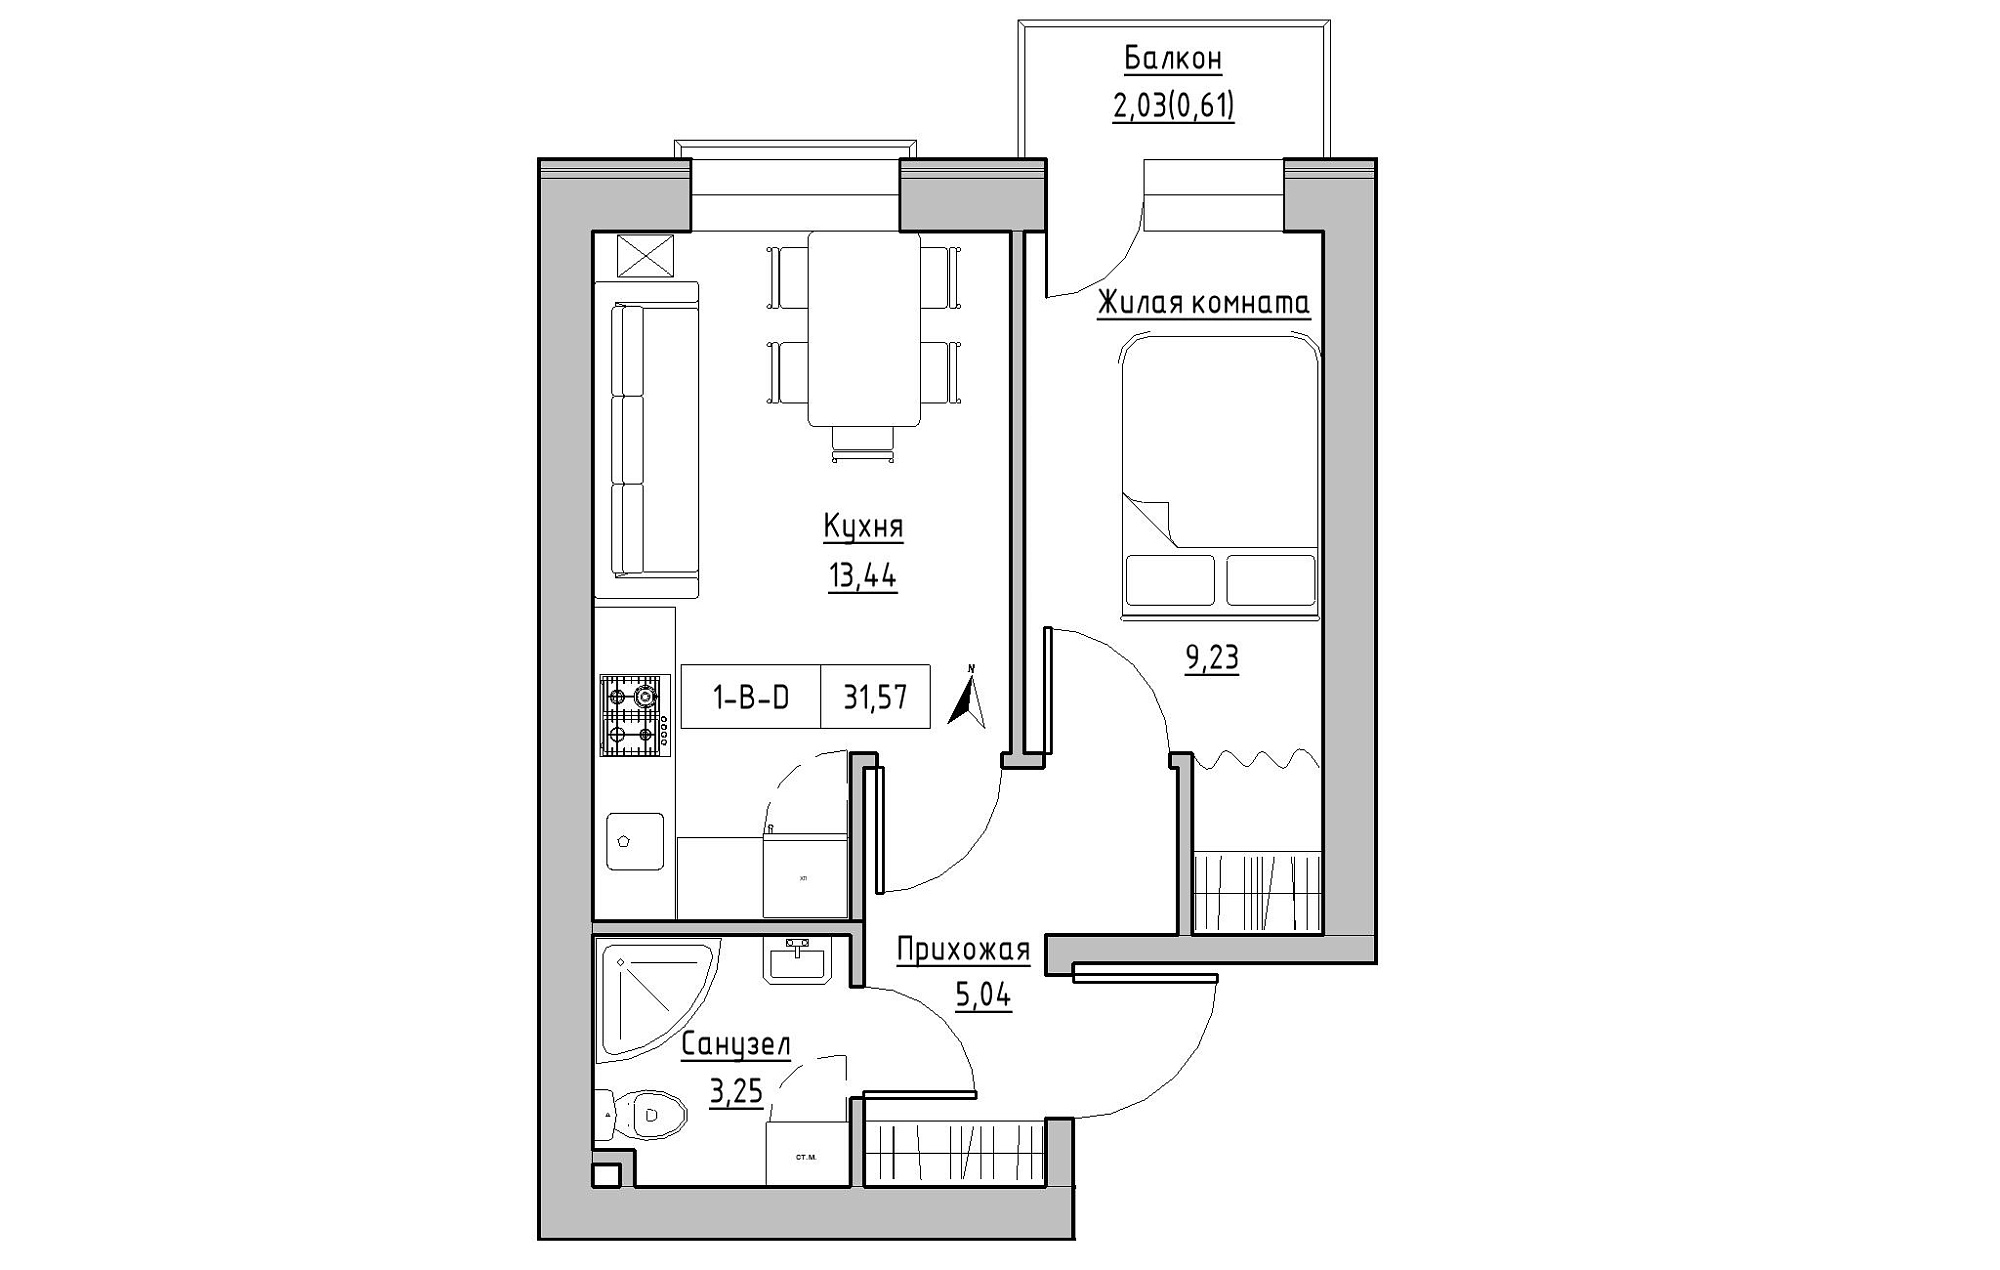 Planning 1-rm flats area 31.57m2, KS-019-02/0013.